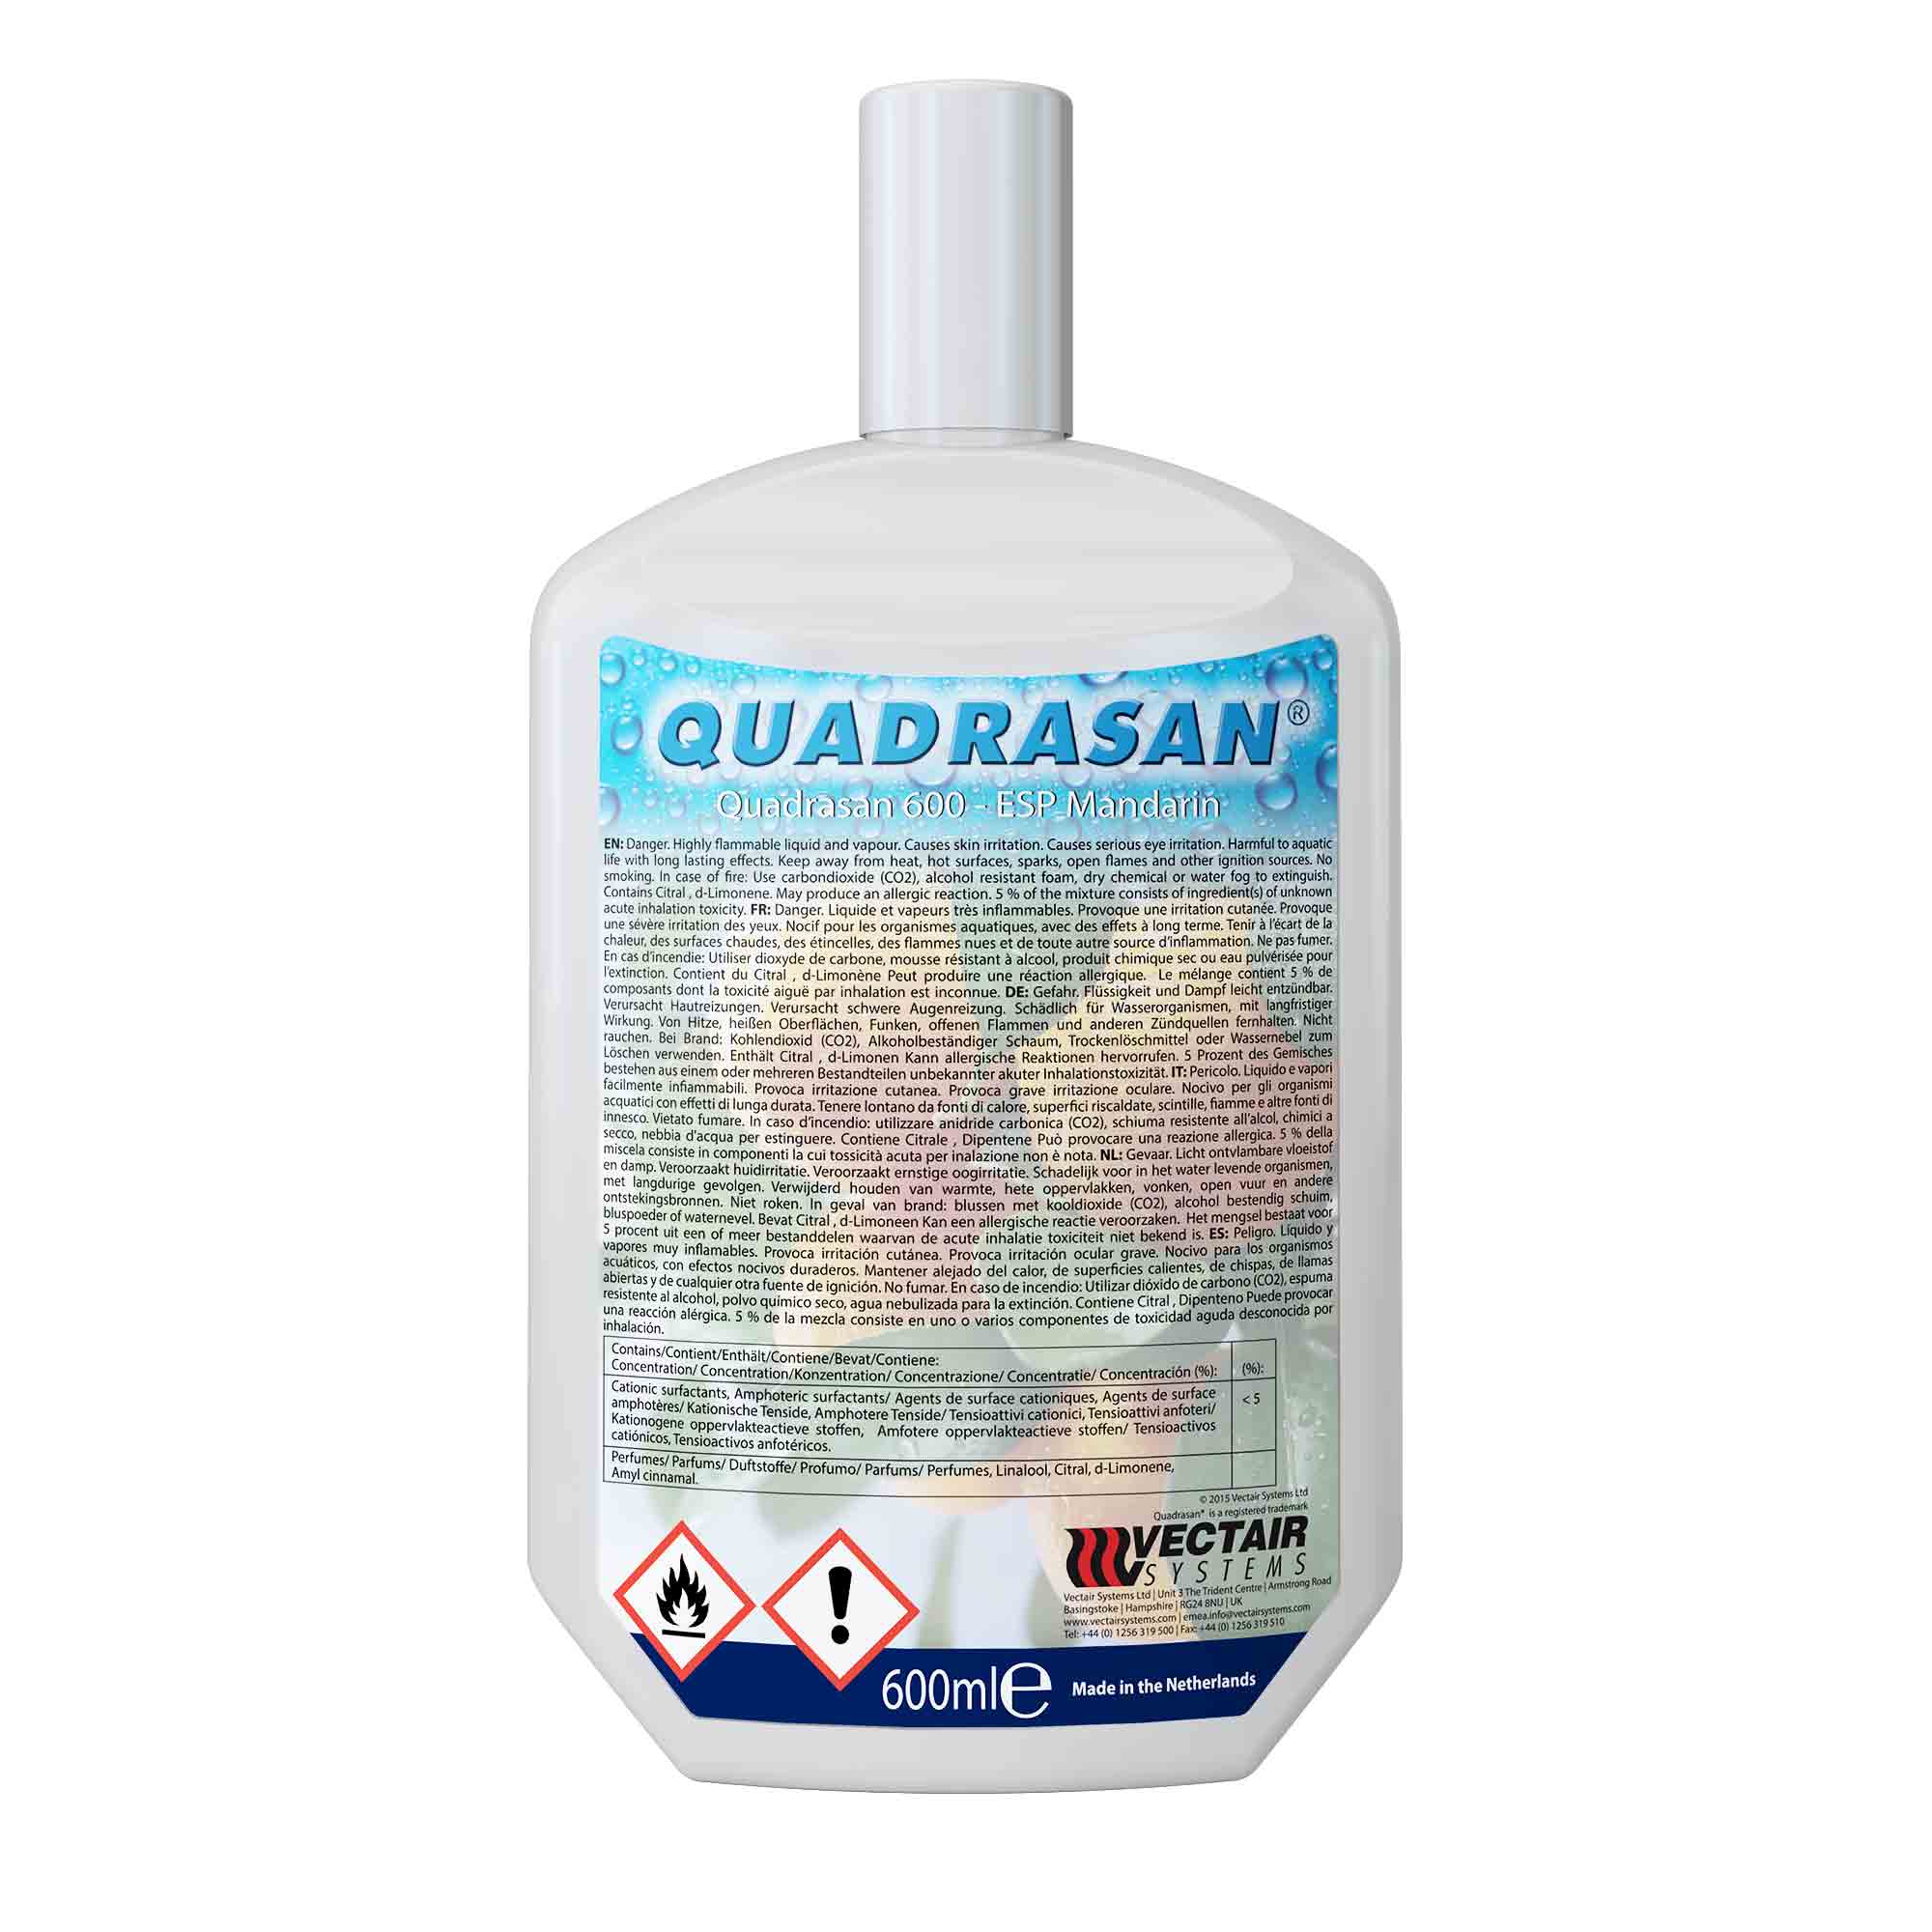 Quadrasan® Cleaning & Dosing Refills